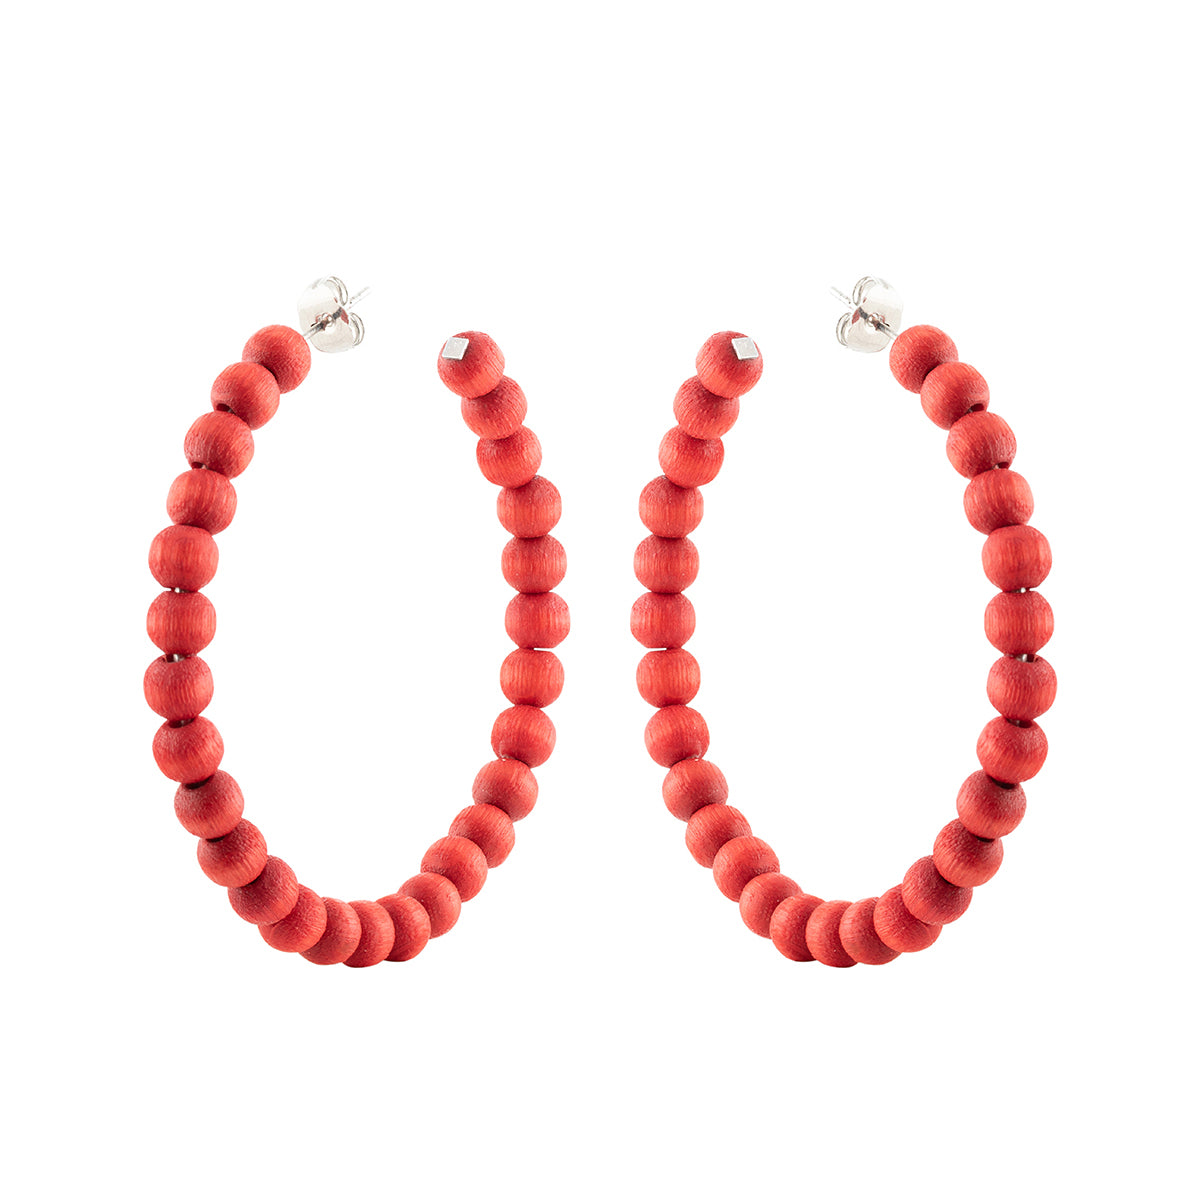 Sofia earrings, red